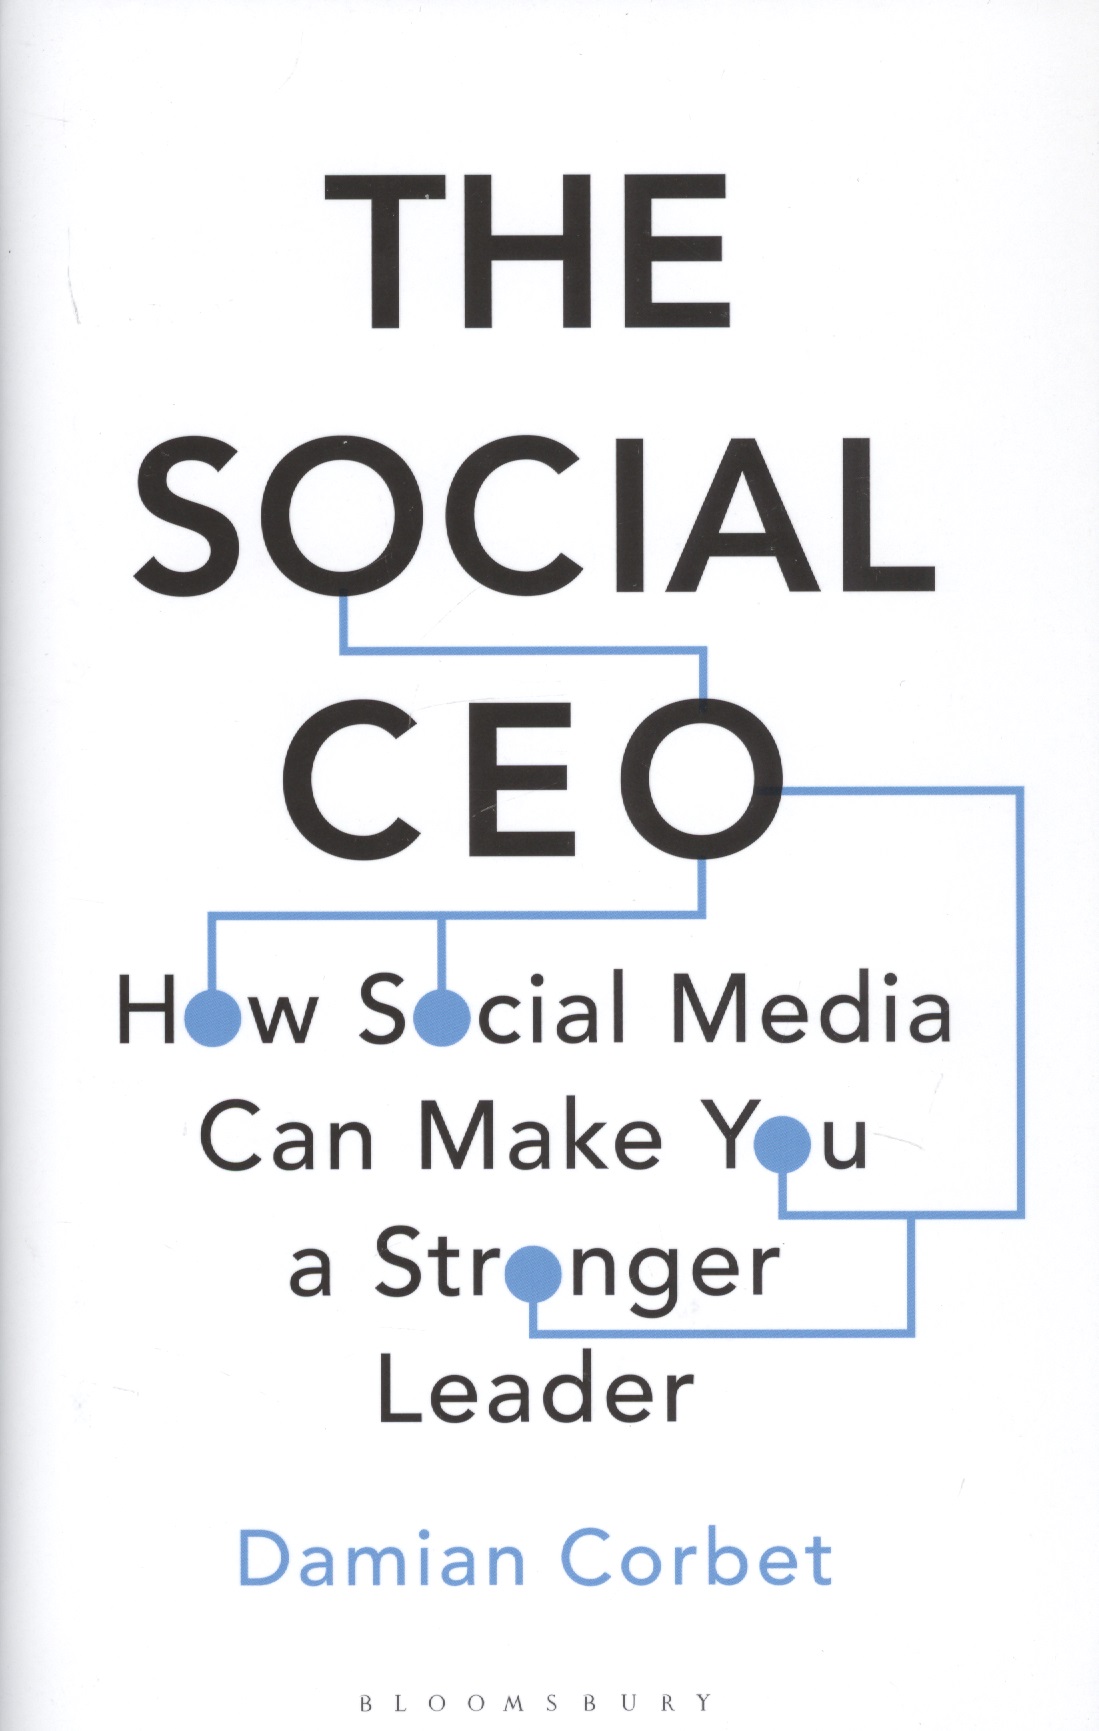 corbet d the social ceo how social media can make you a stronger leader The Social CEO: How Social Media Can Make You A Stronger Leader